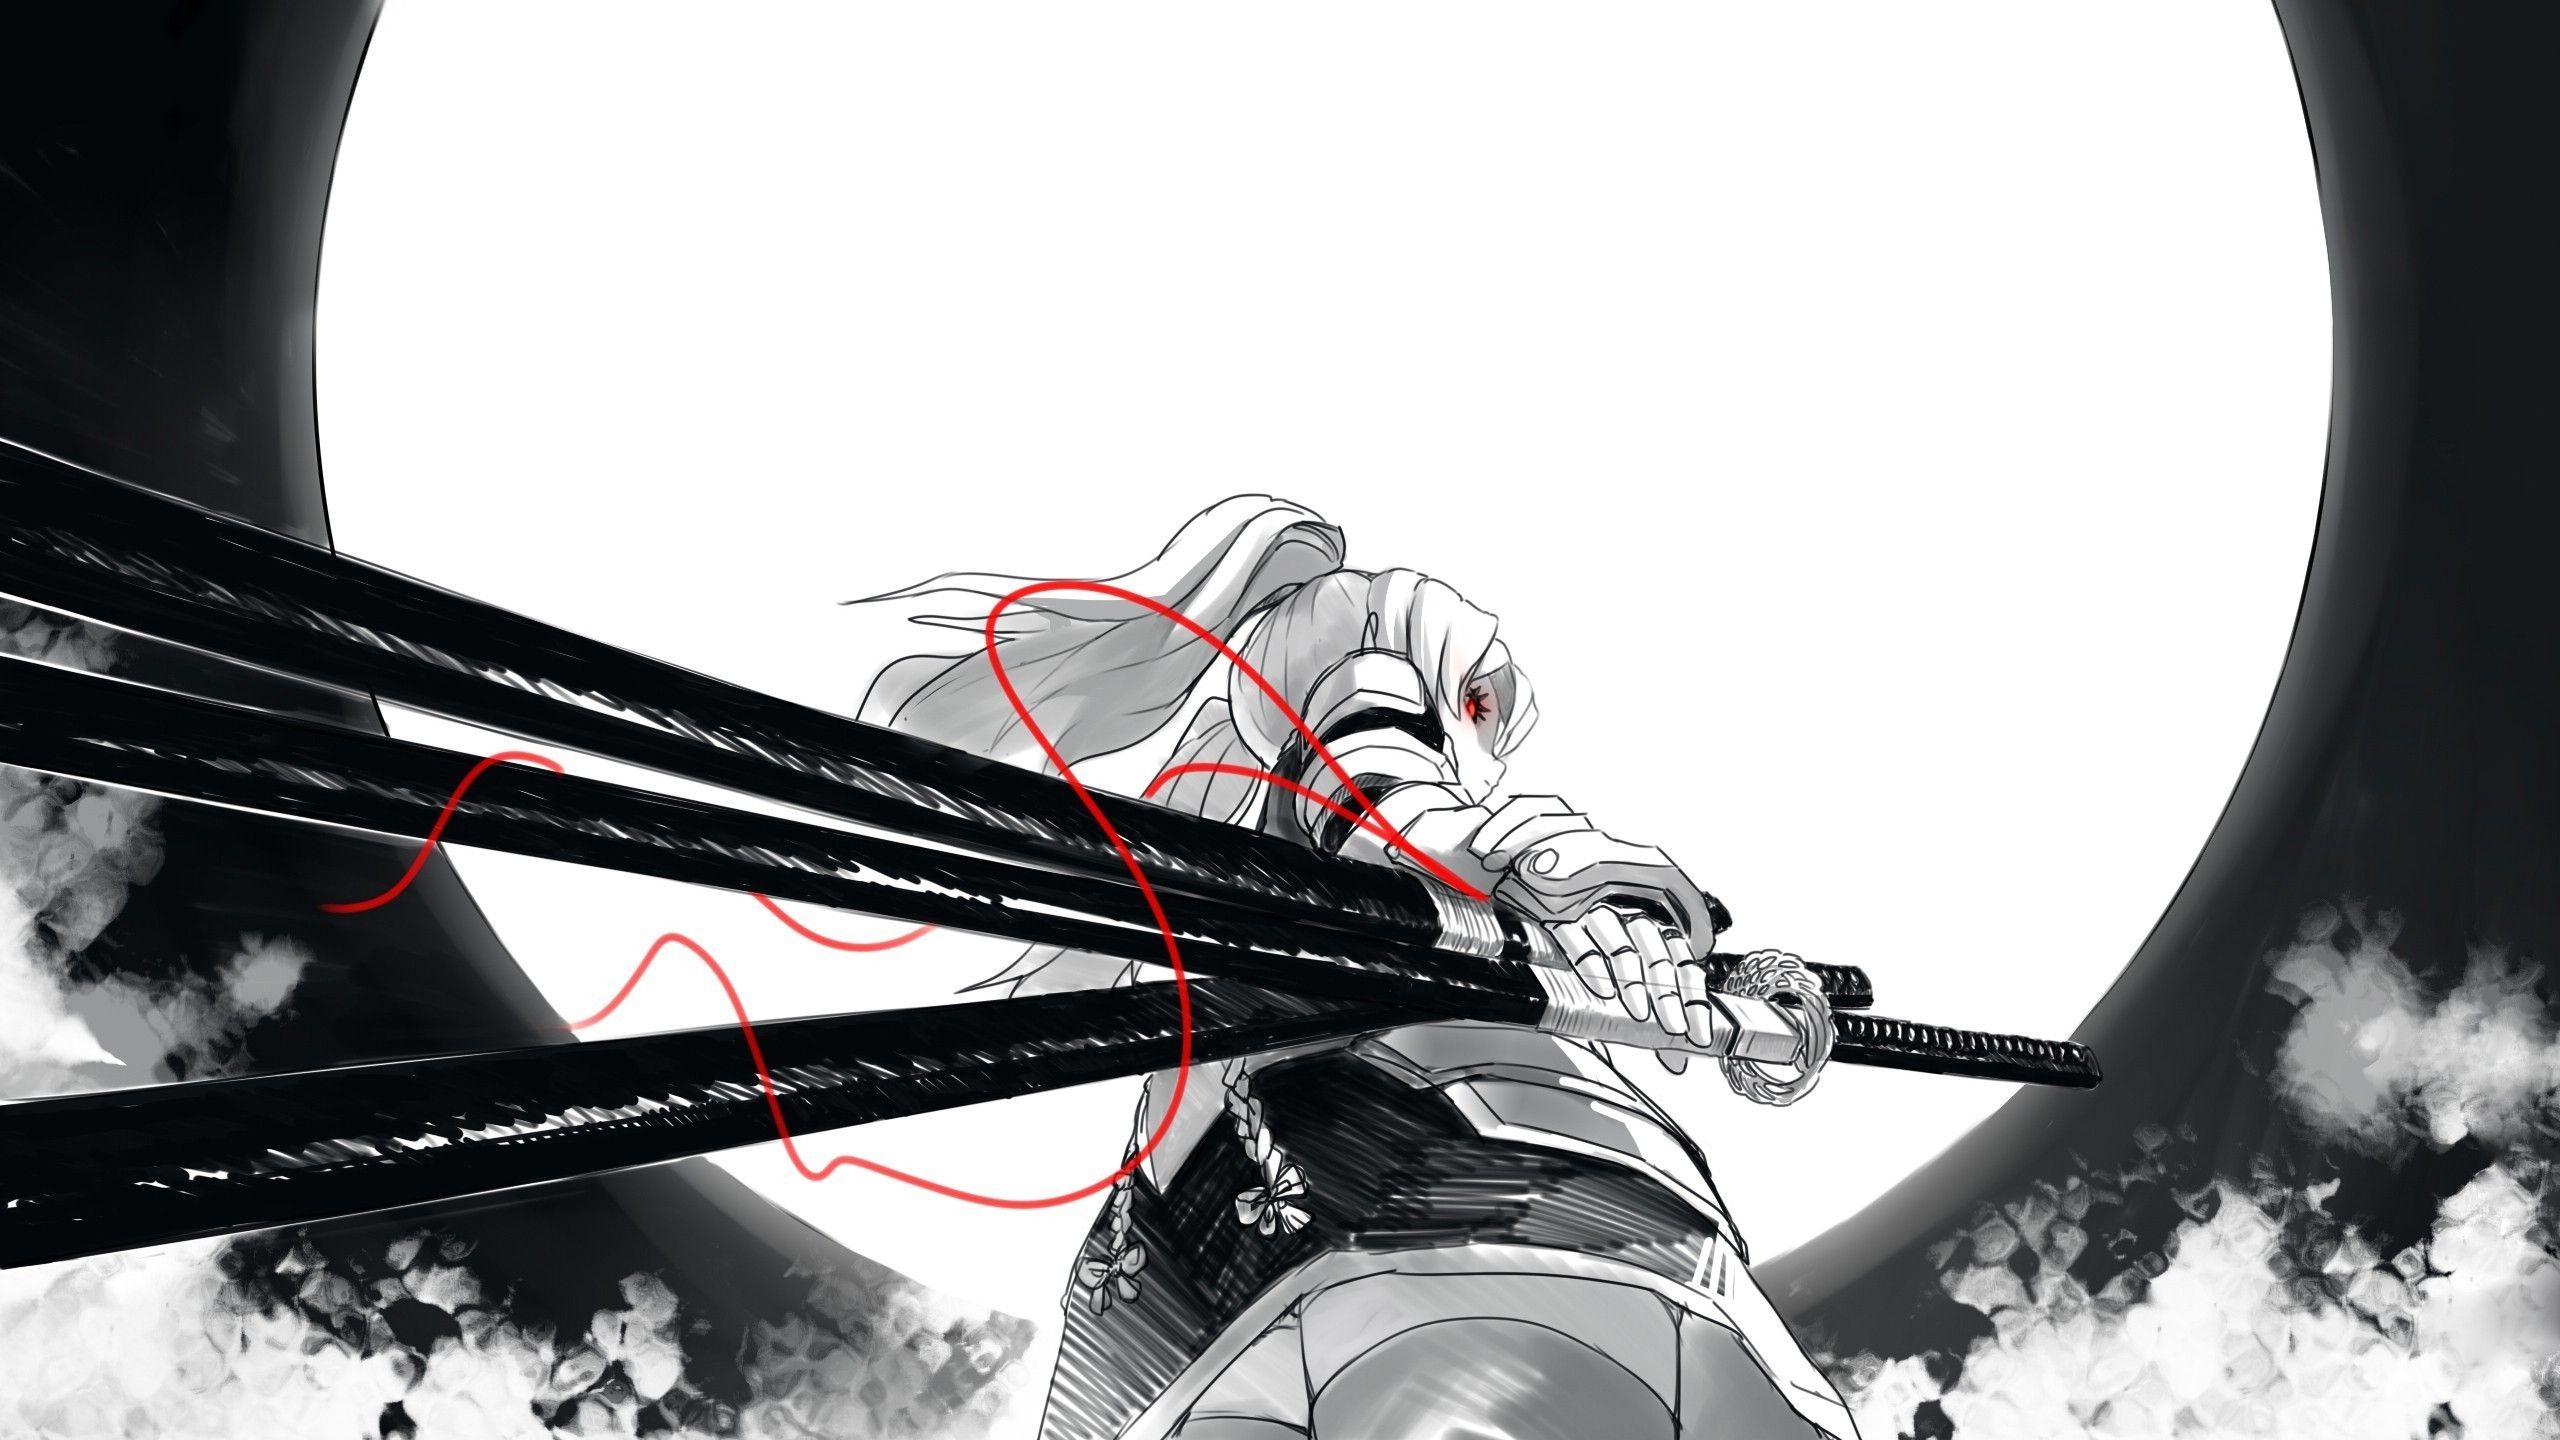 Anime Samurai Wallpaper 2020